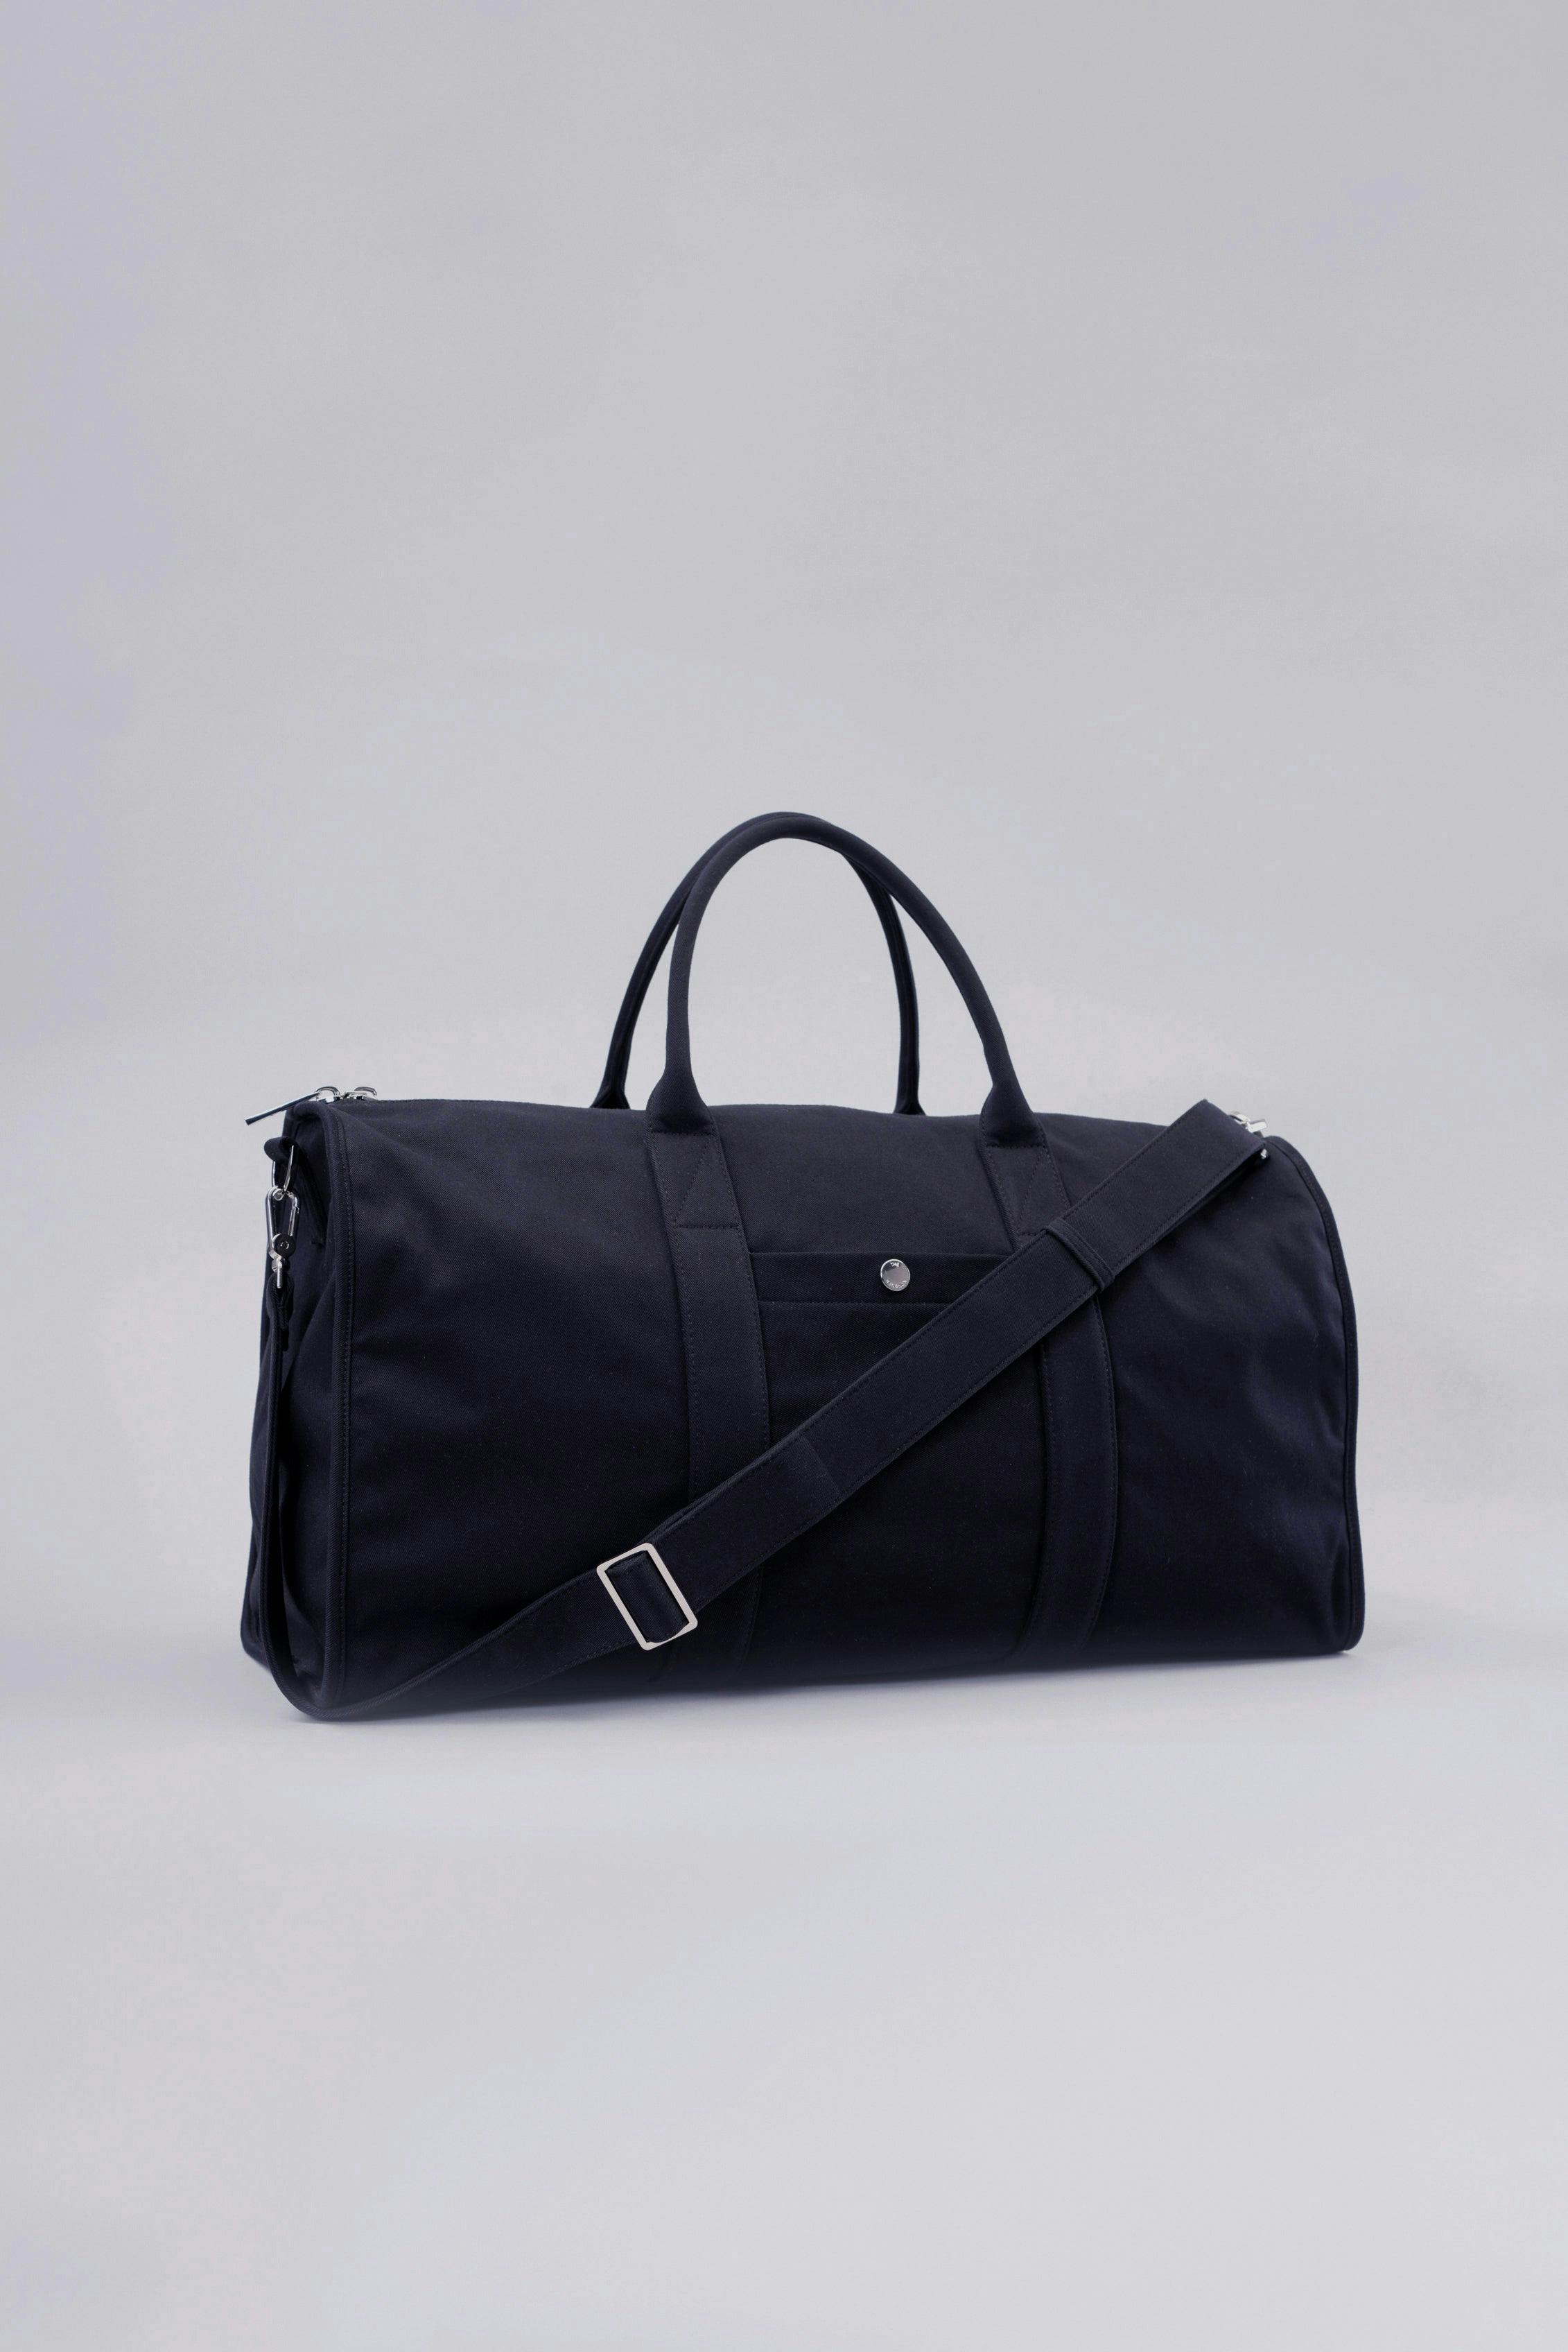 ˝PROSPERITY˝ Duffle Bag - Plain Black